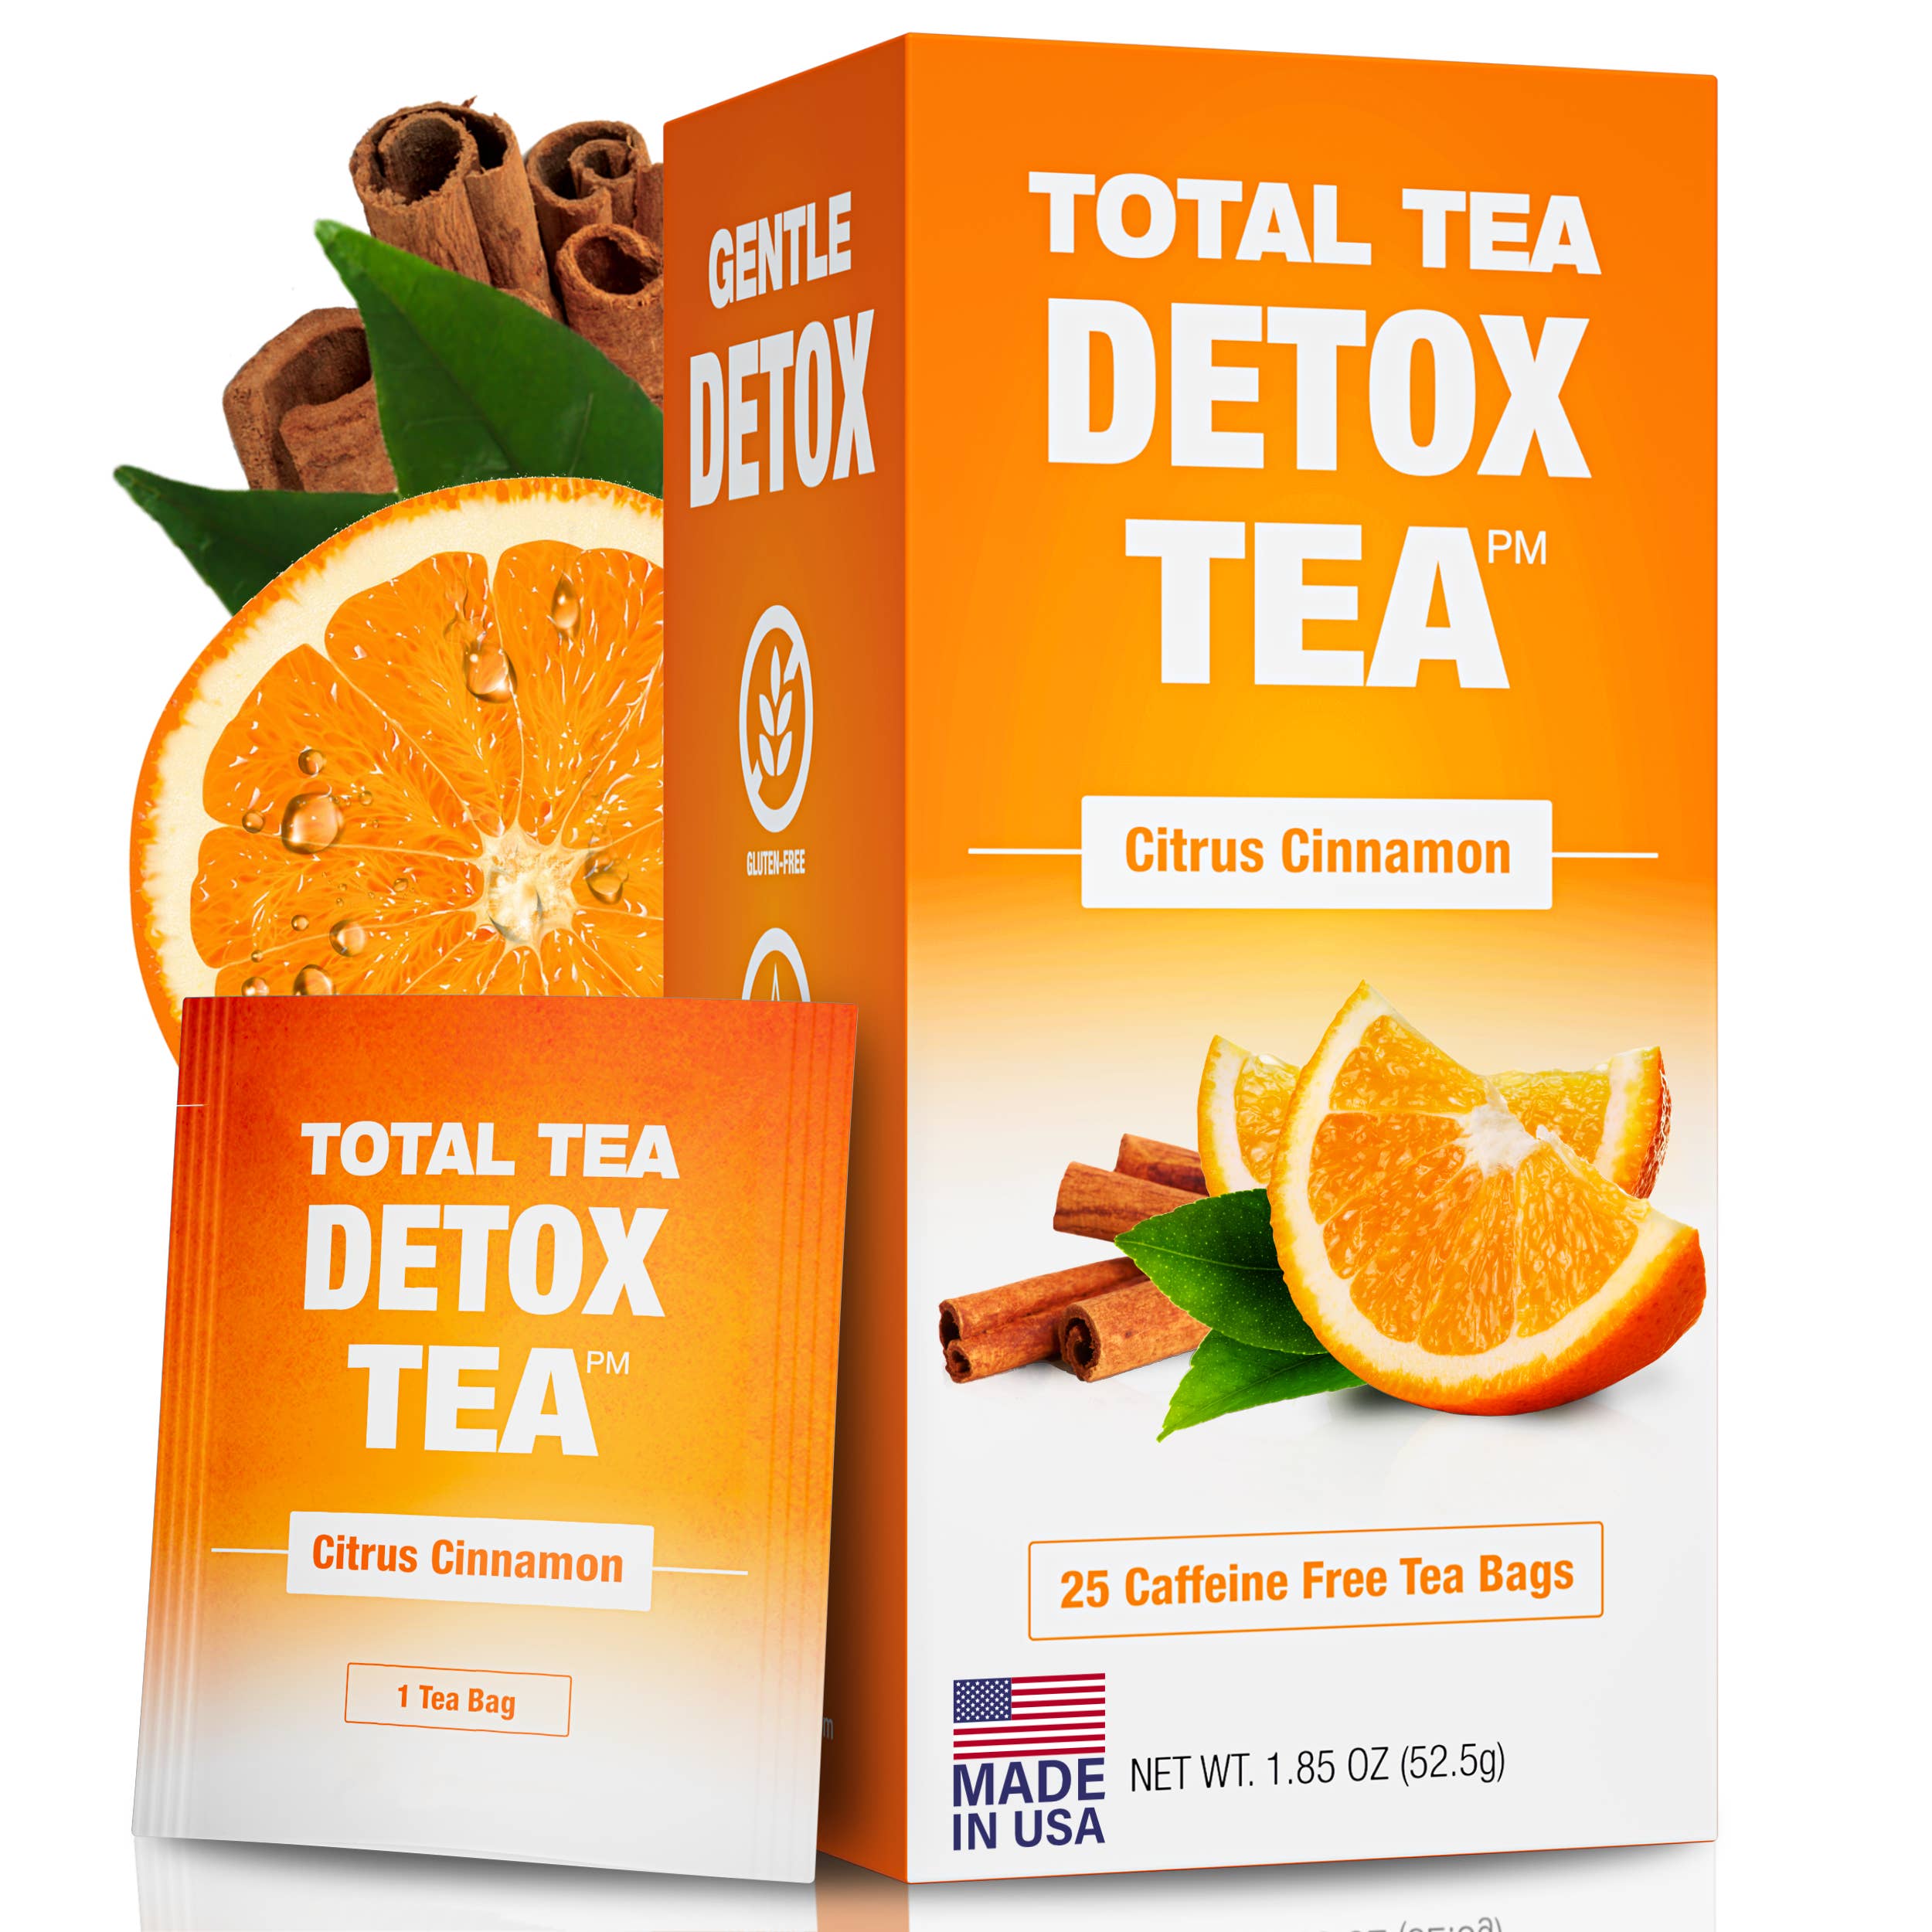 Wholesale The Minceur Fast Weight Loss Diet Tea 28 Days Detox Slimming Fit  Tea Flat Tummy Tea - China Weight Loss Tea, Slimming Tea